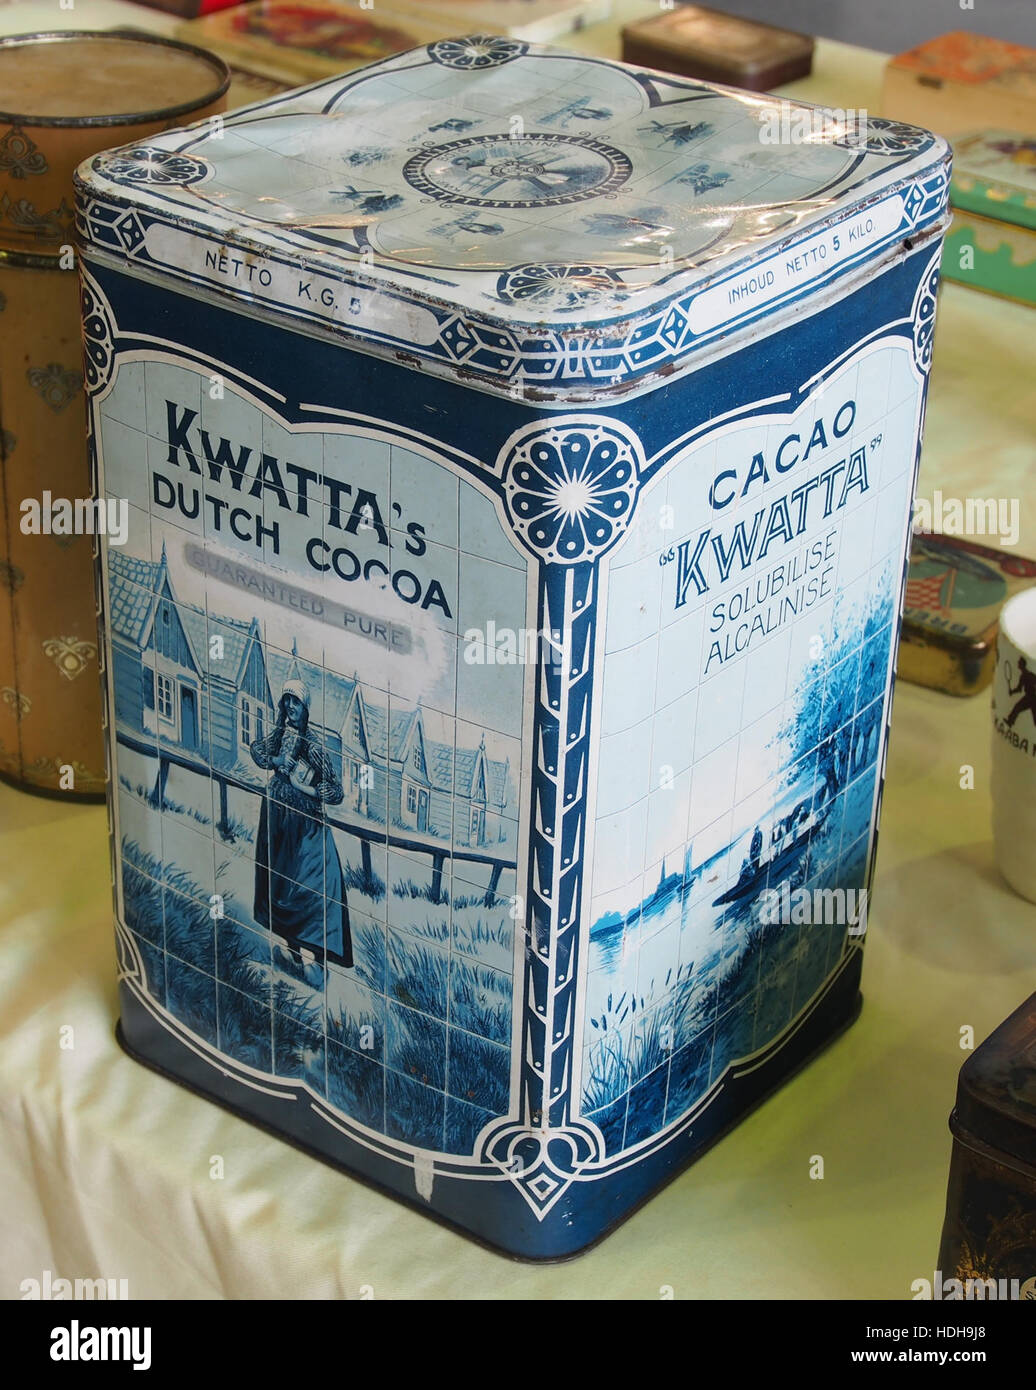 Kwattas dutch cocoa 5kg blik pic1 Stock Photo